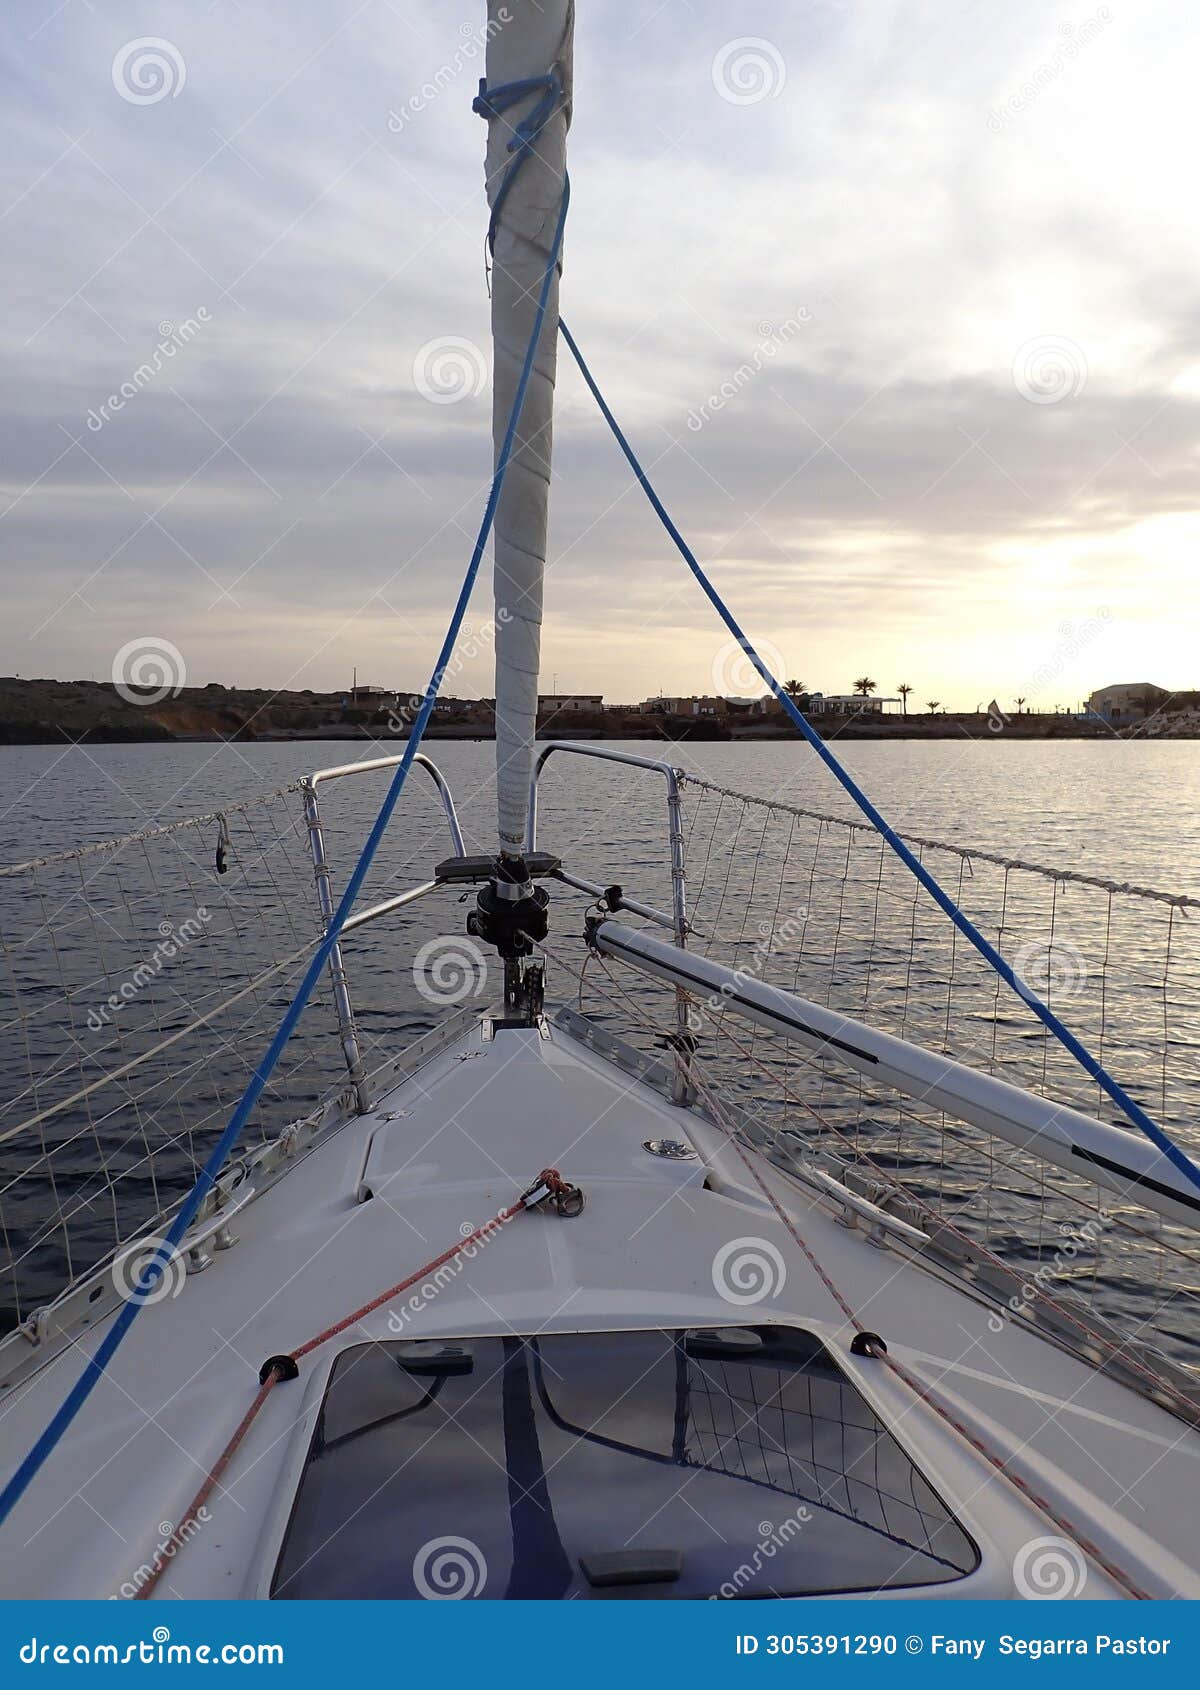 sailing at the mediterranean sunset